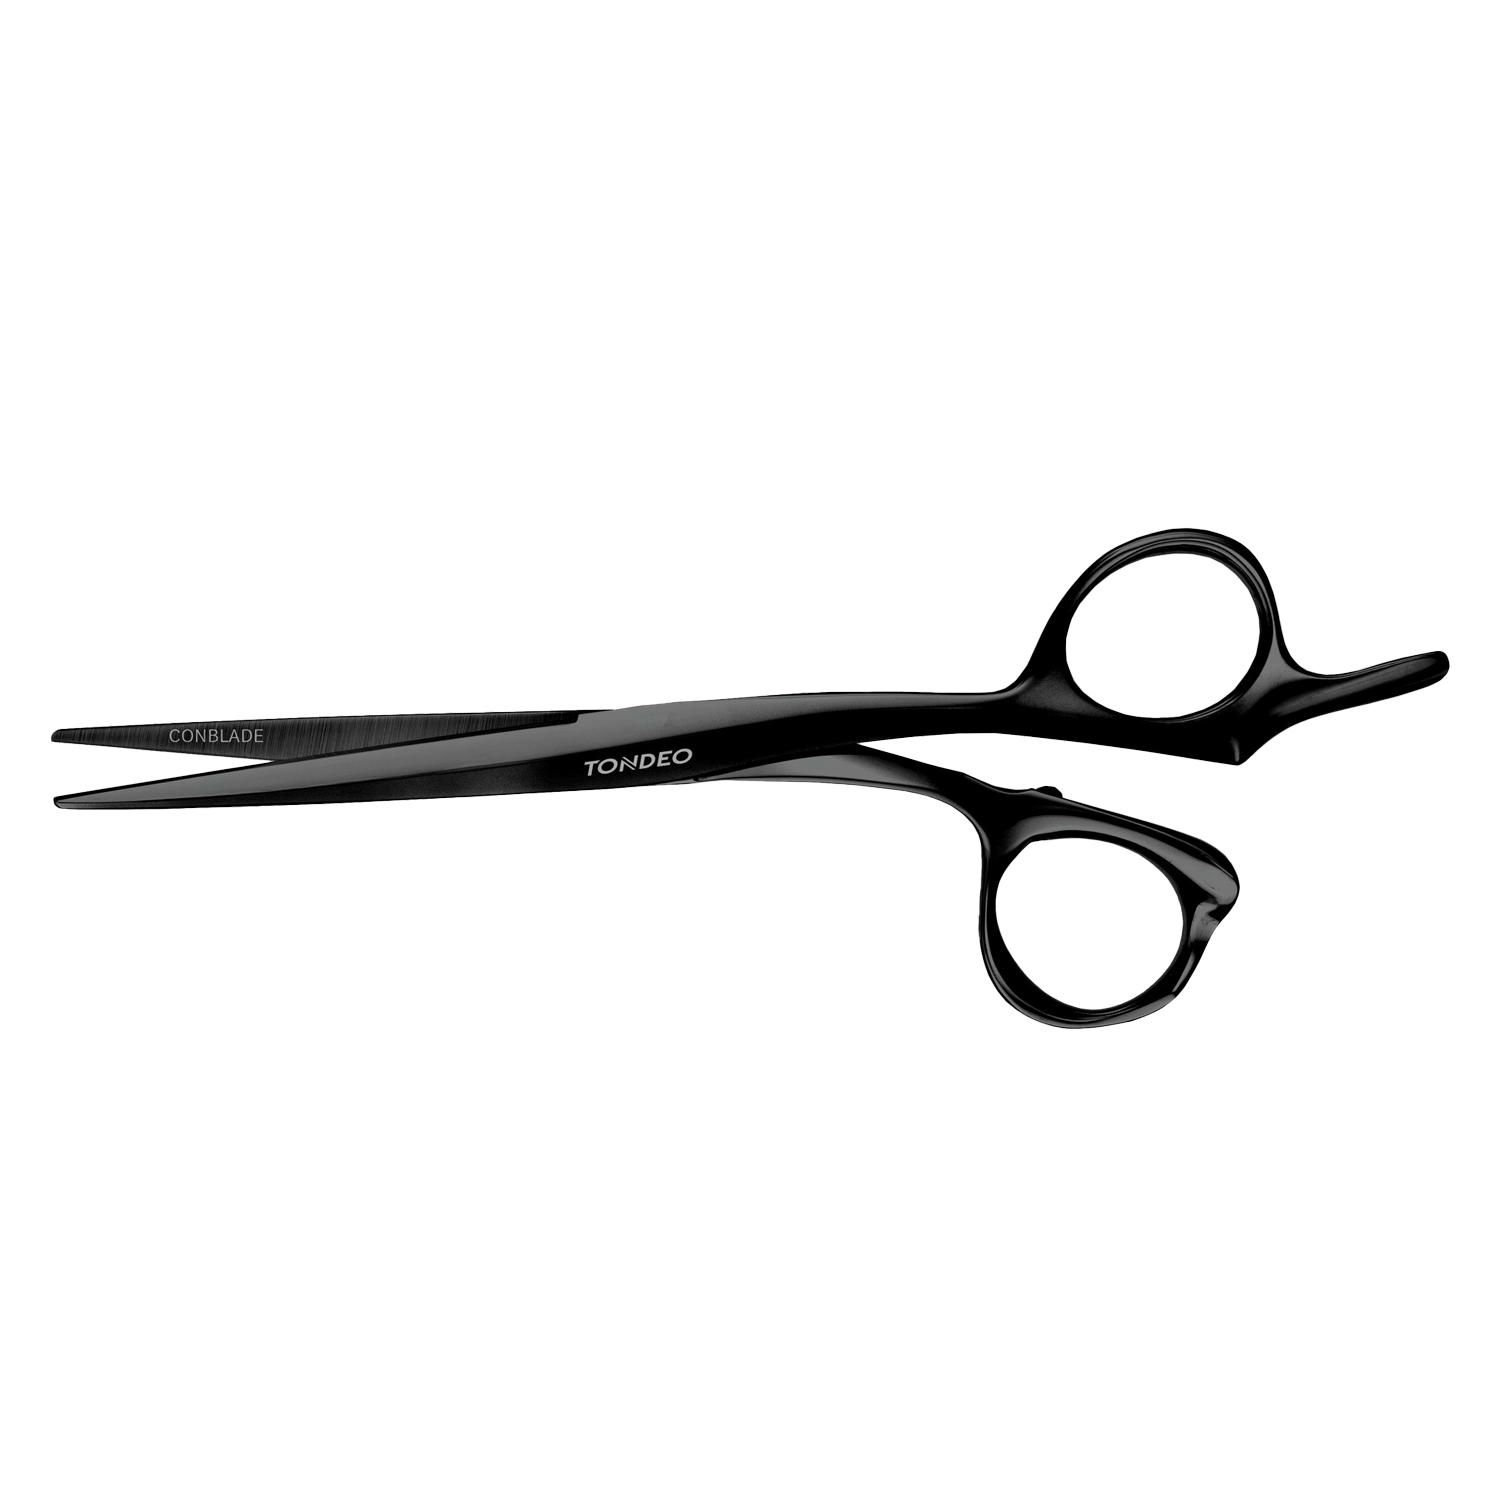 Product image from Tondeo Scissors - Zentao Black Offset Scissors 6.5" CONBLADE